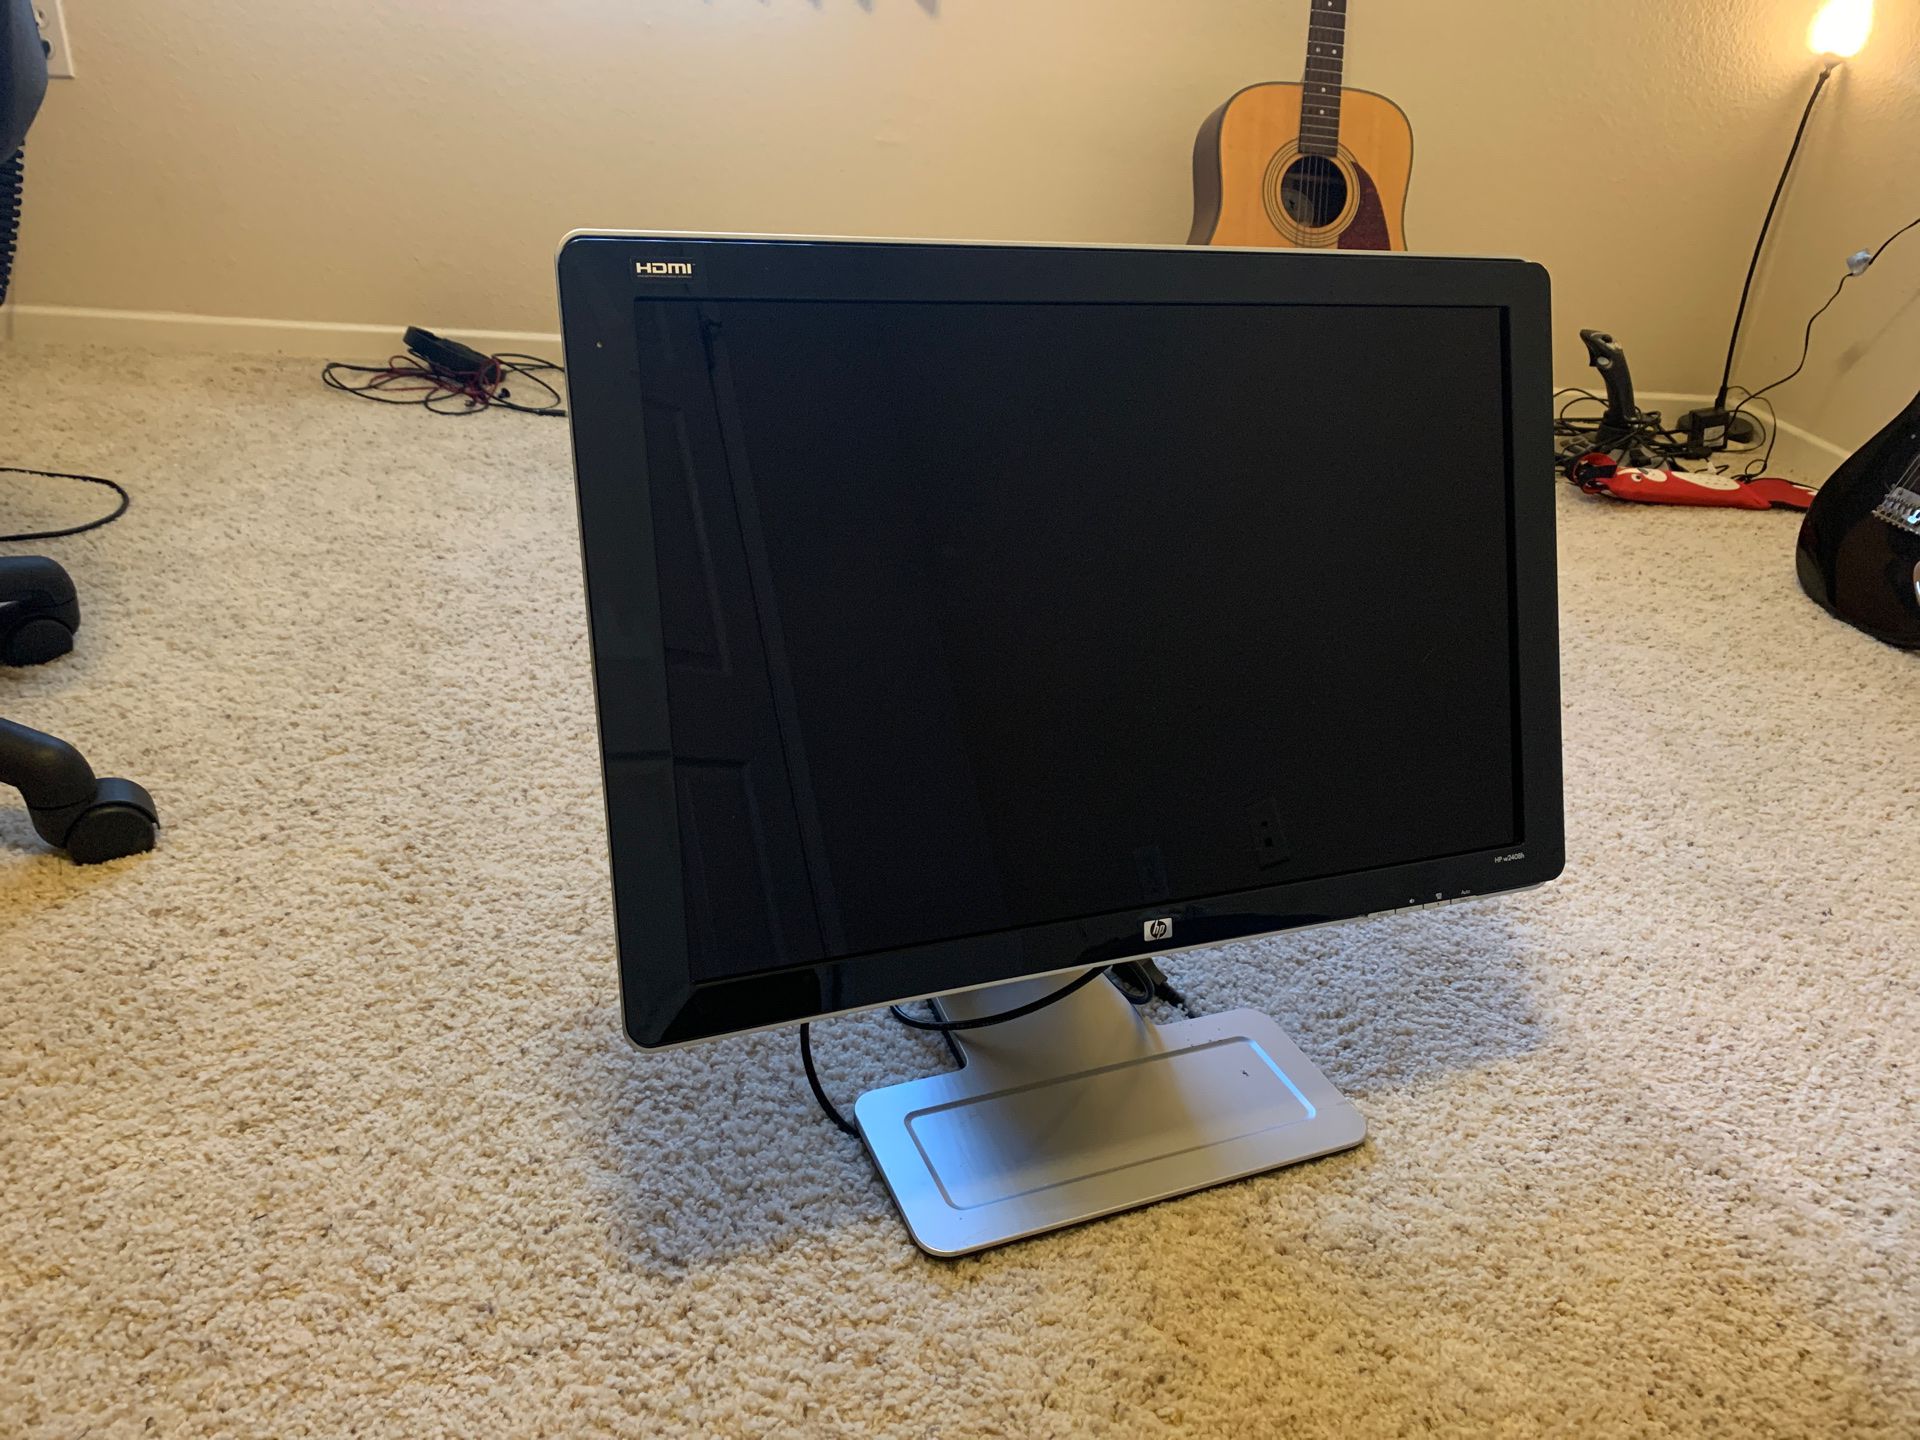 HP monitor 24” hp w2408h, 1920x1200 resolution